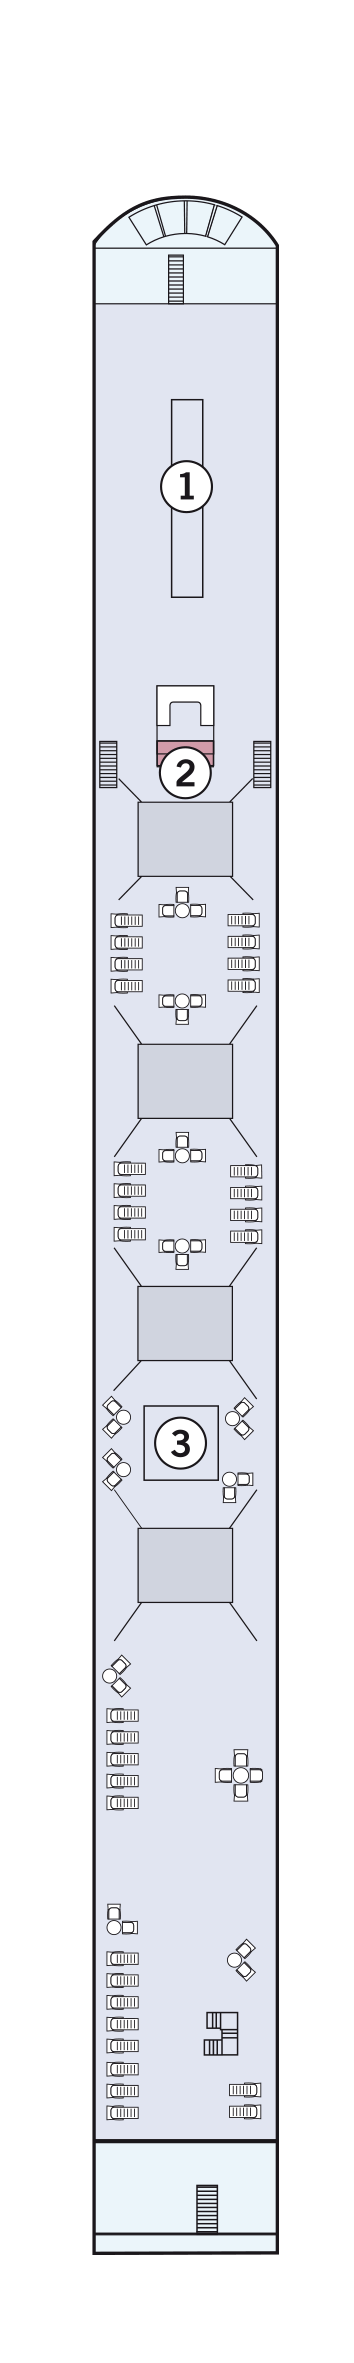 MS Amadeus Silver III - Amadeus Flusskreuzfahrten - Deck 4 (Sonnen-Deck)